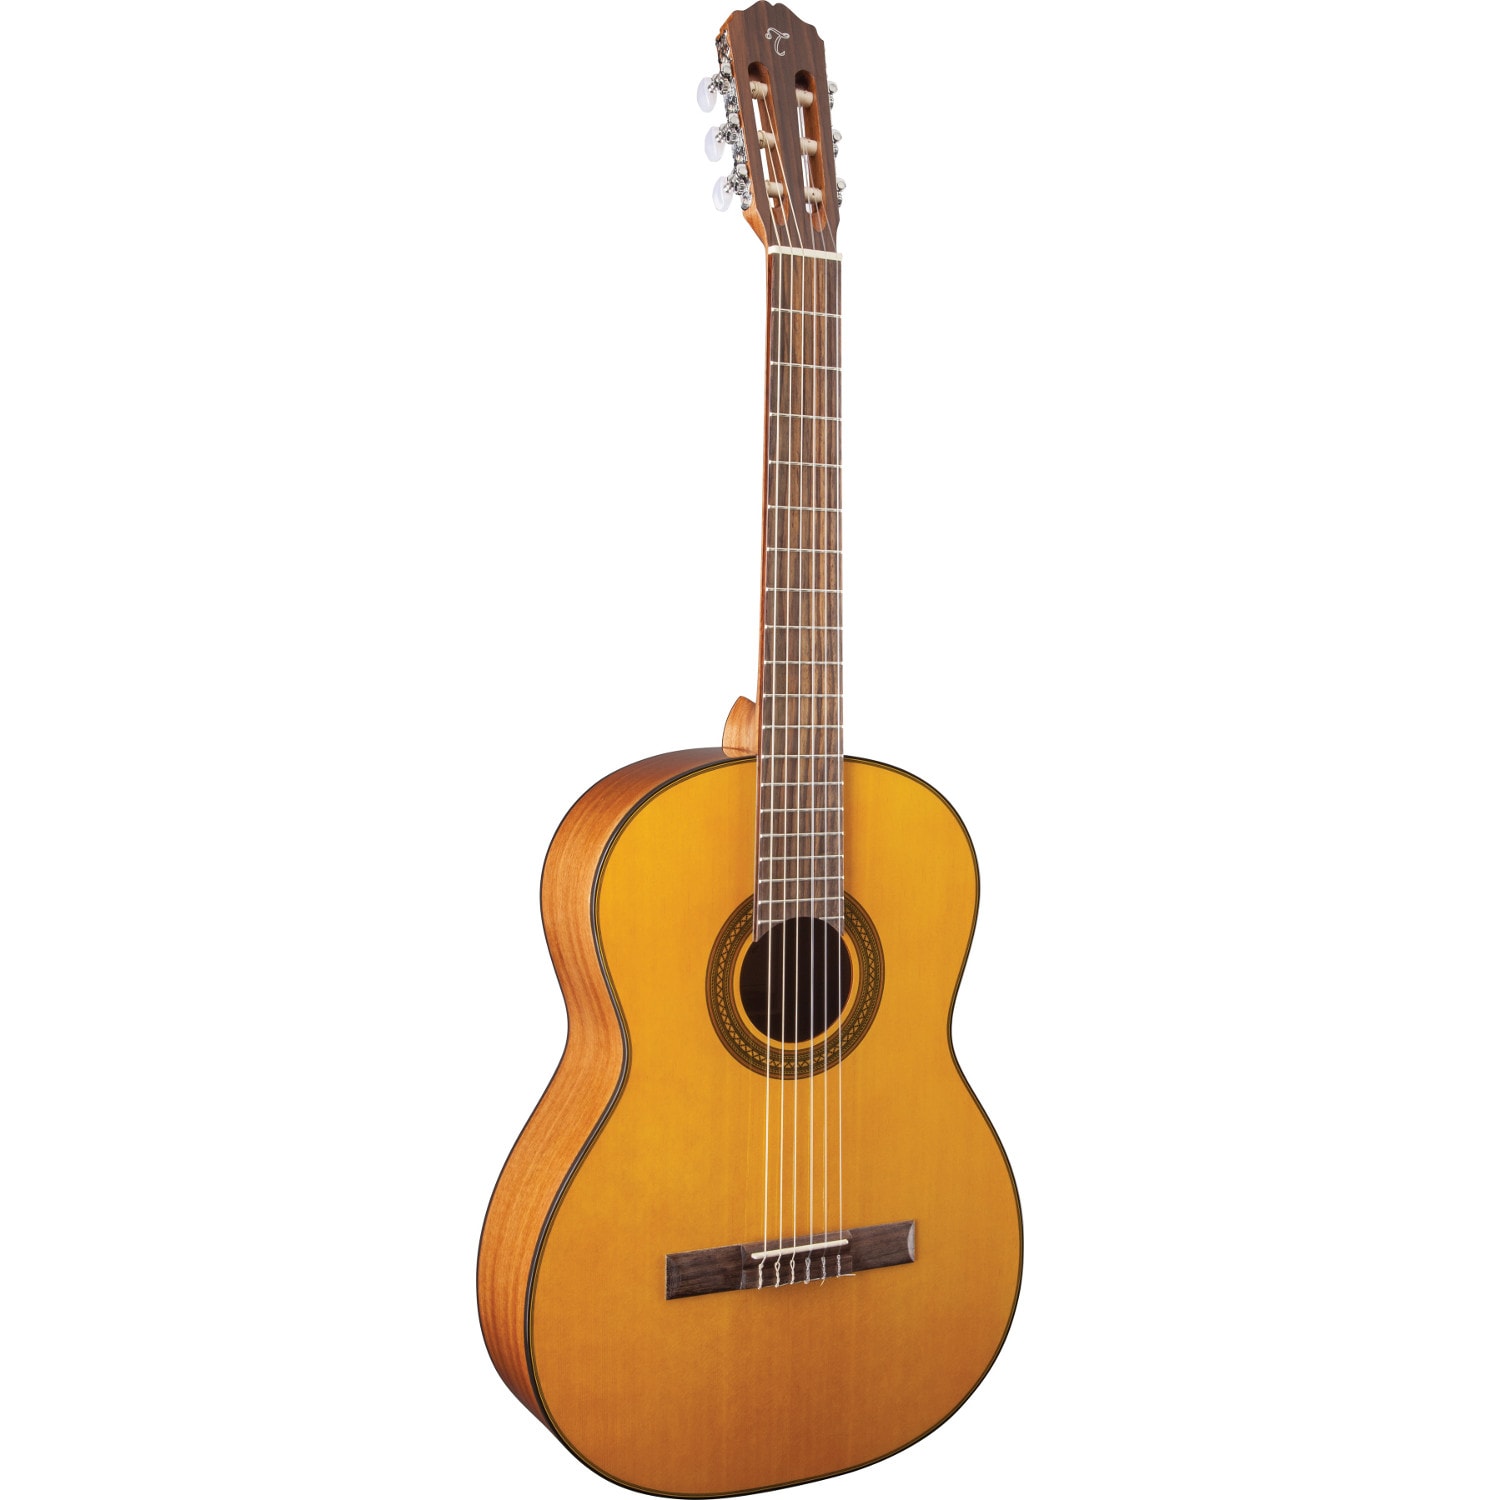 Takamine GC1-NAT klassieke gitaar